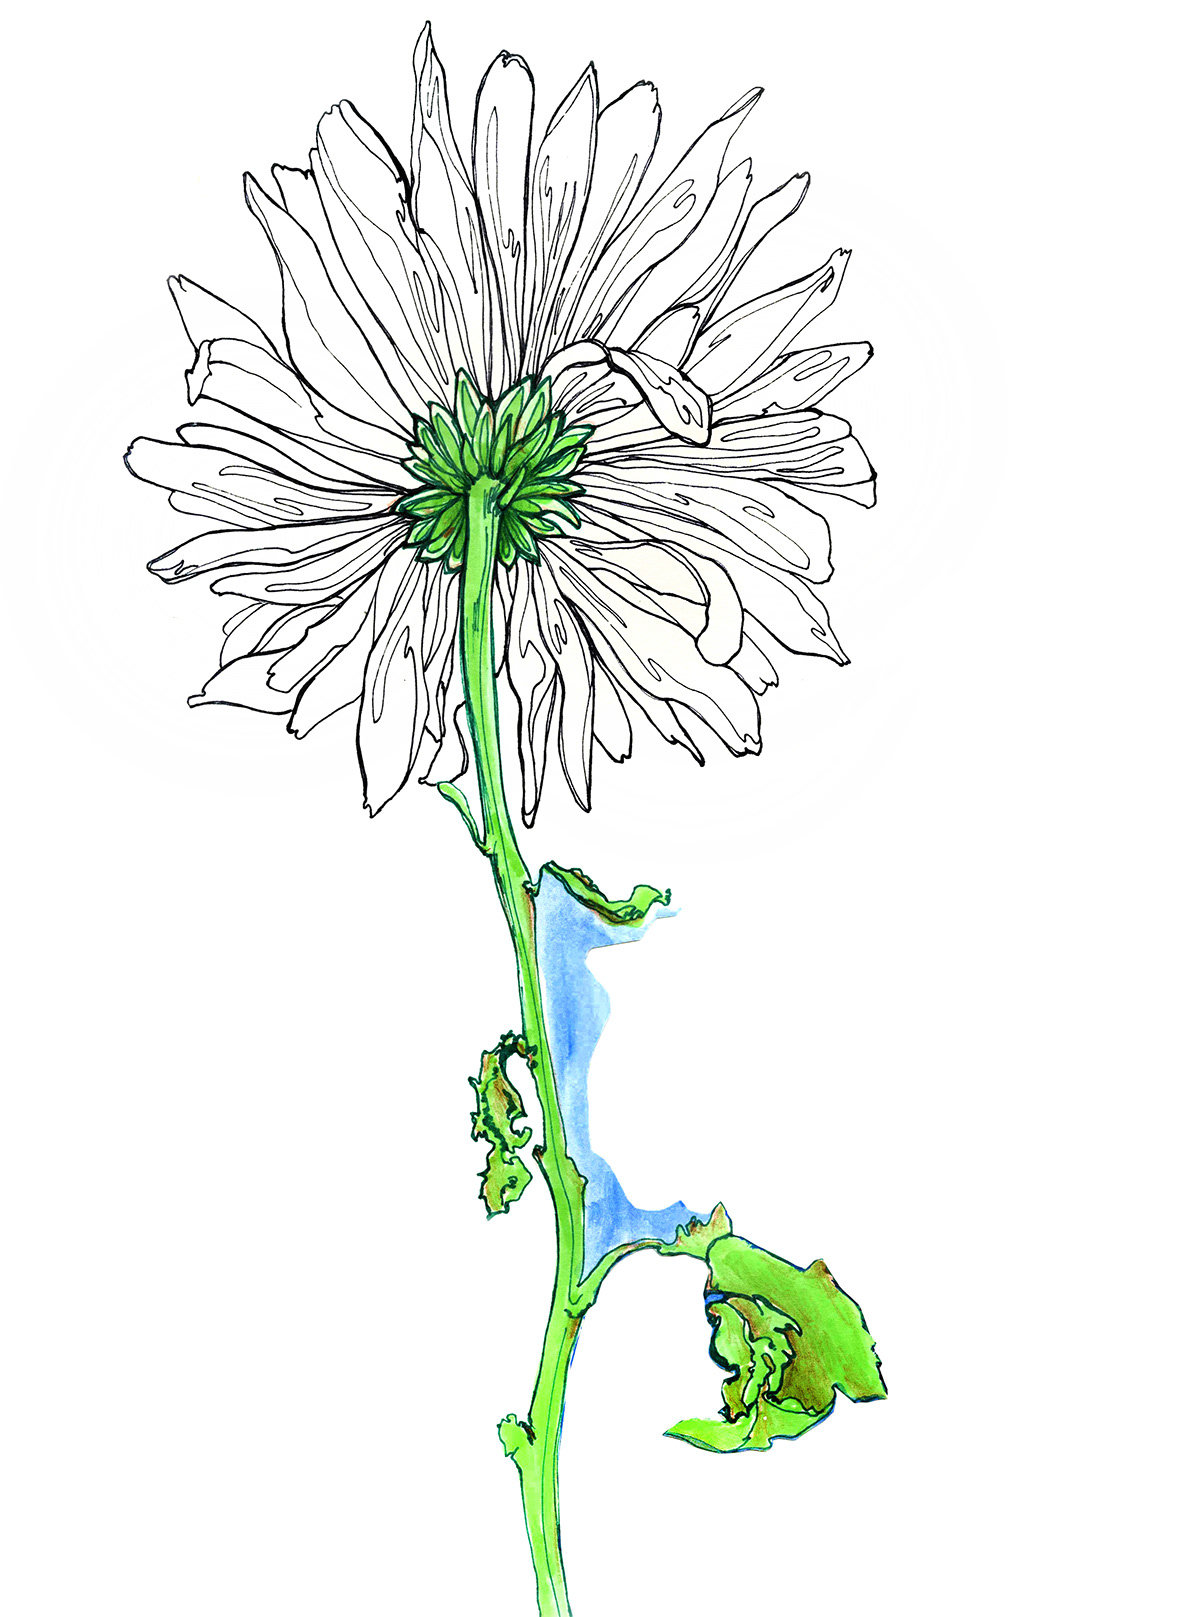 Flowers drawings sketchbook Textiles florals repeats realistic